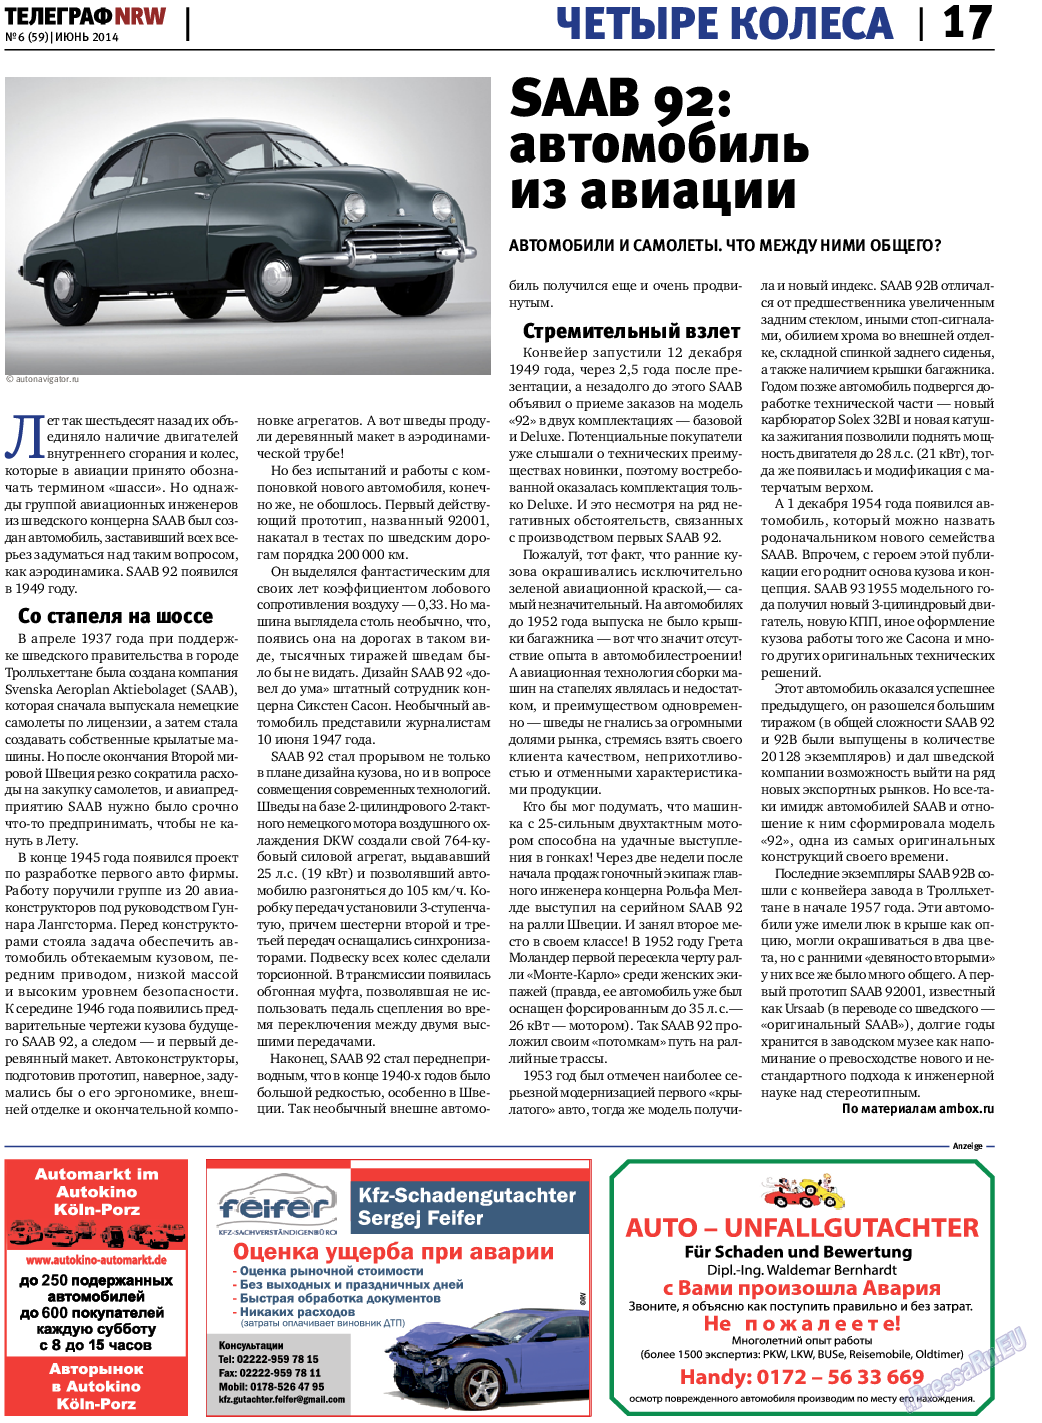 Телеграф NRW, газета. 2014 №6 стр.17